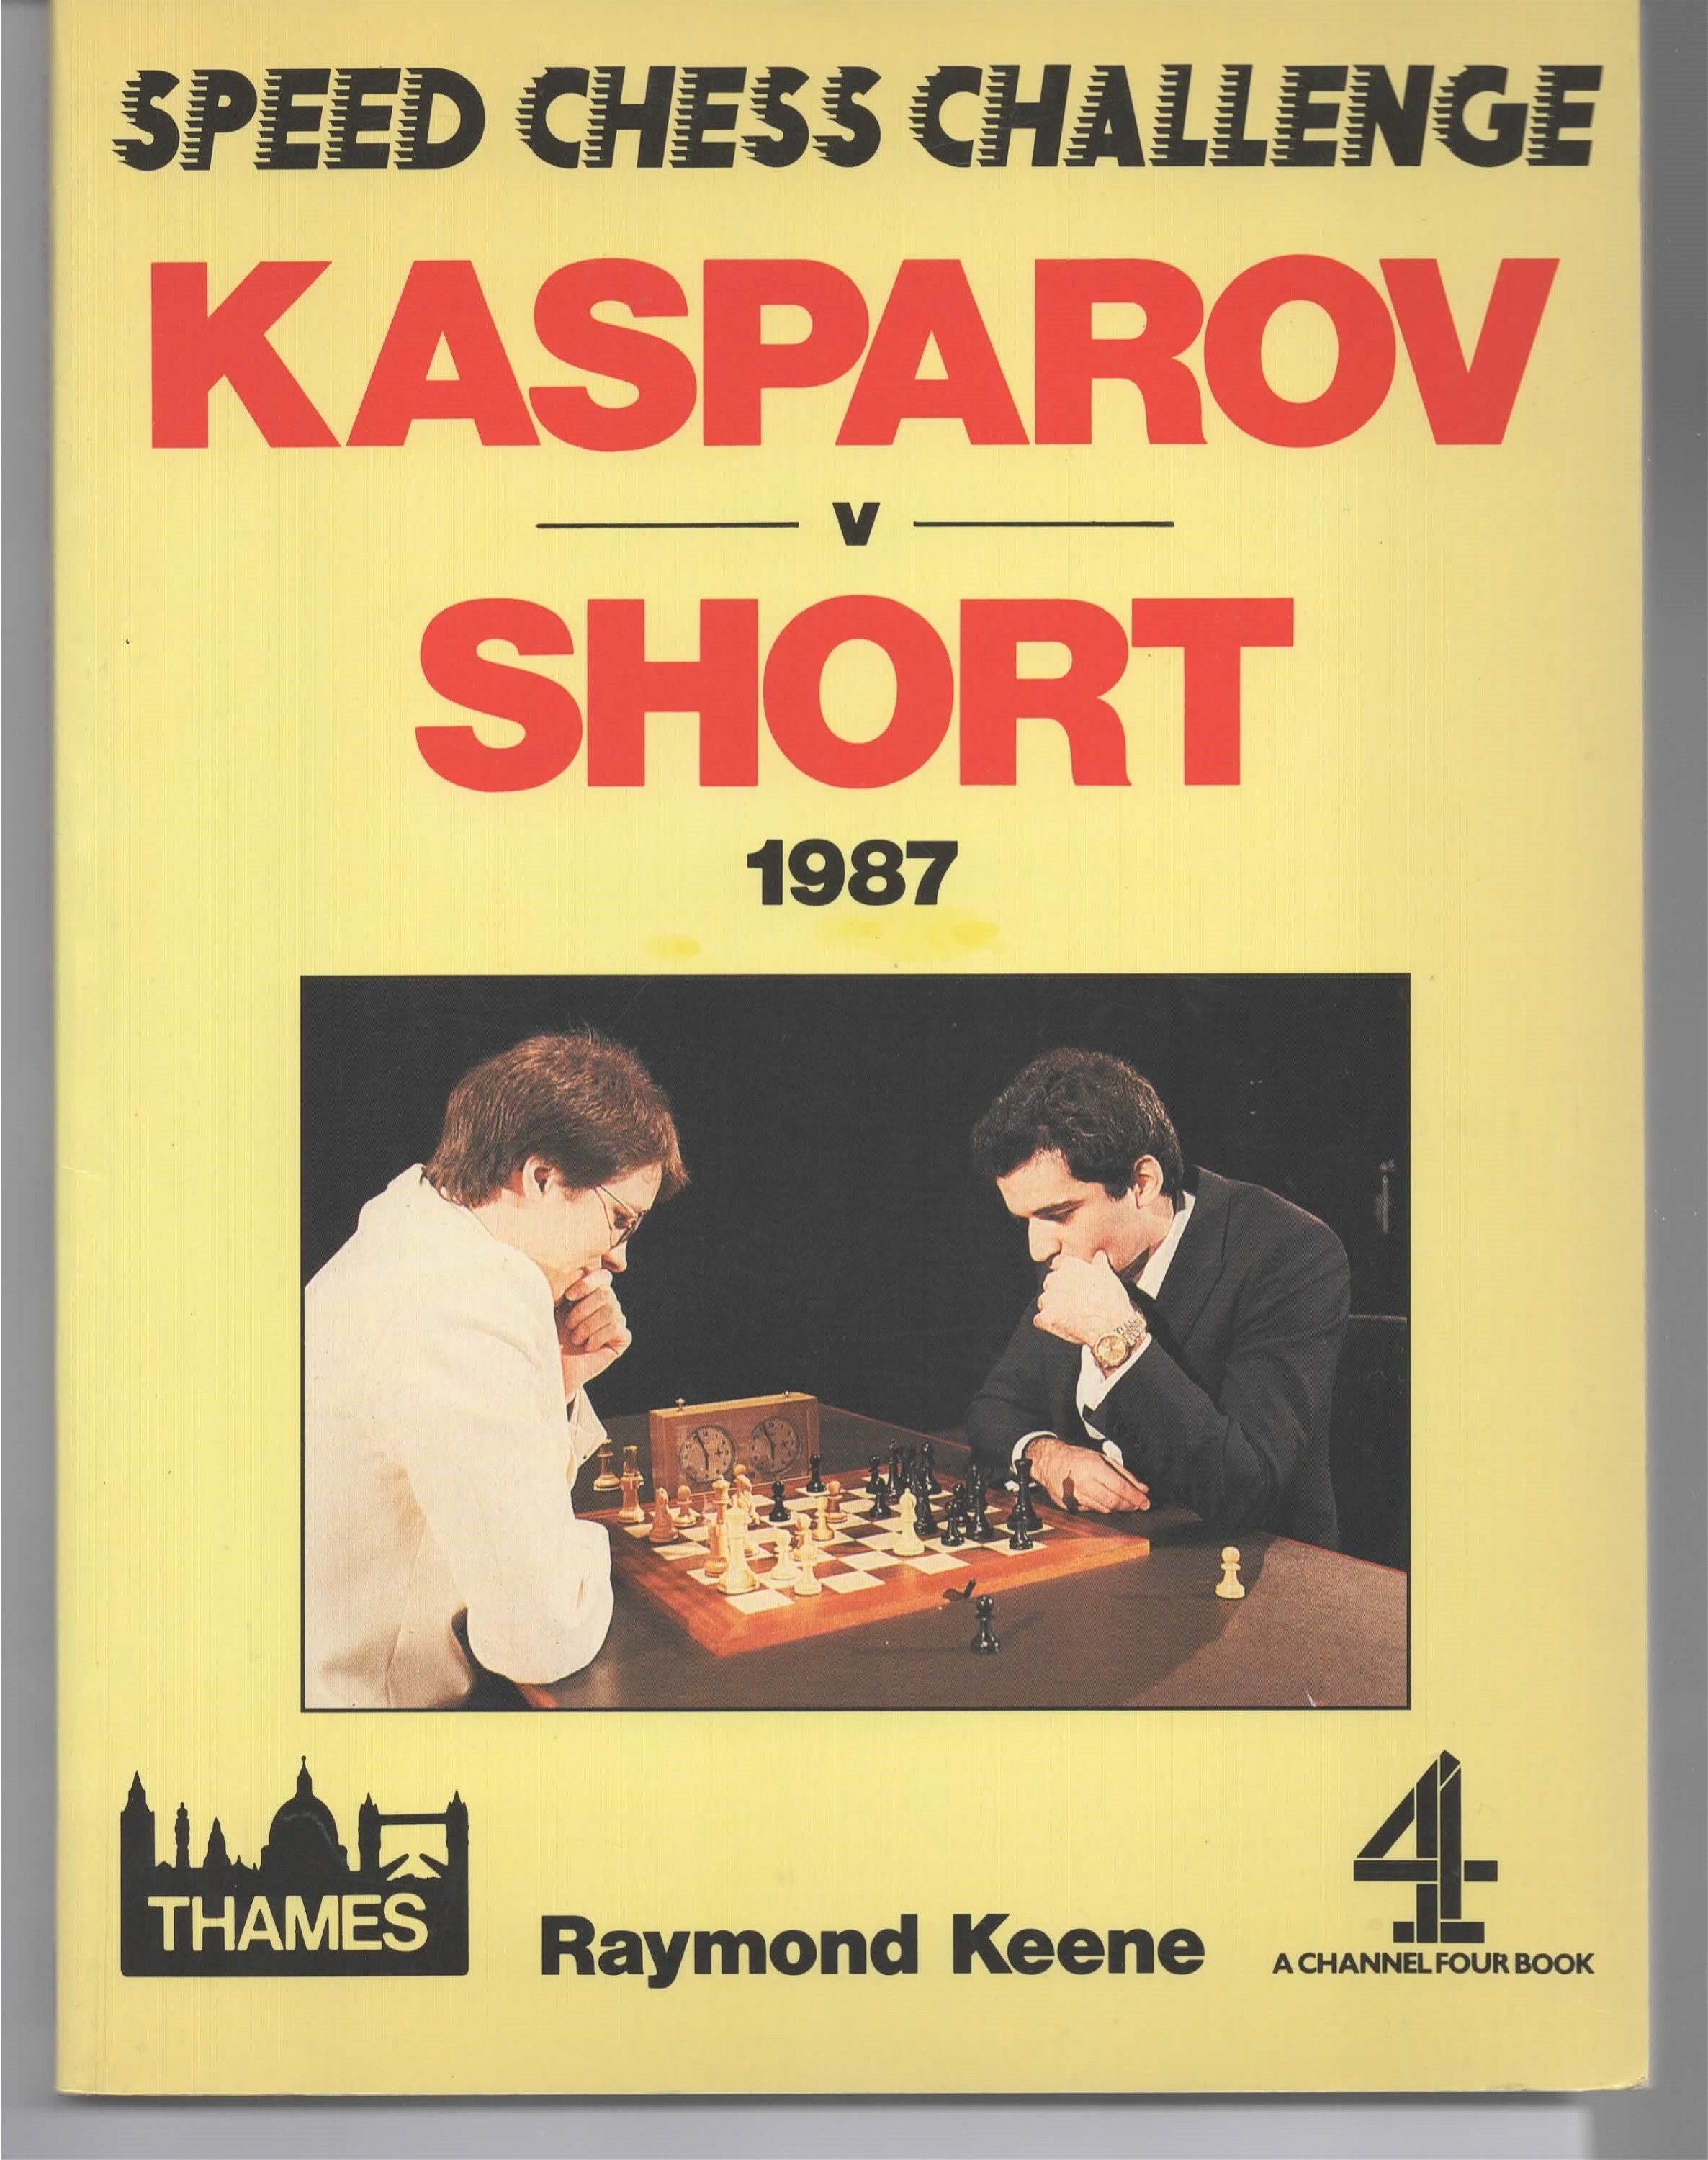 The World Chess Crown Challenge Kasparov Vs Karpov Seville 87